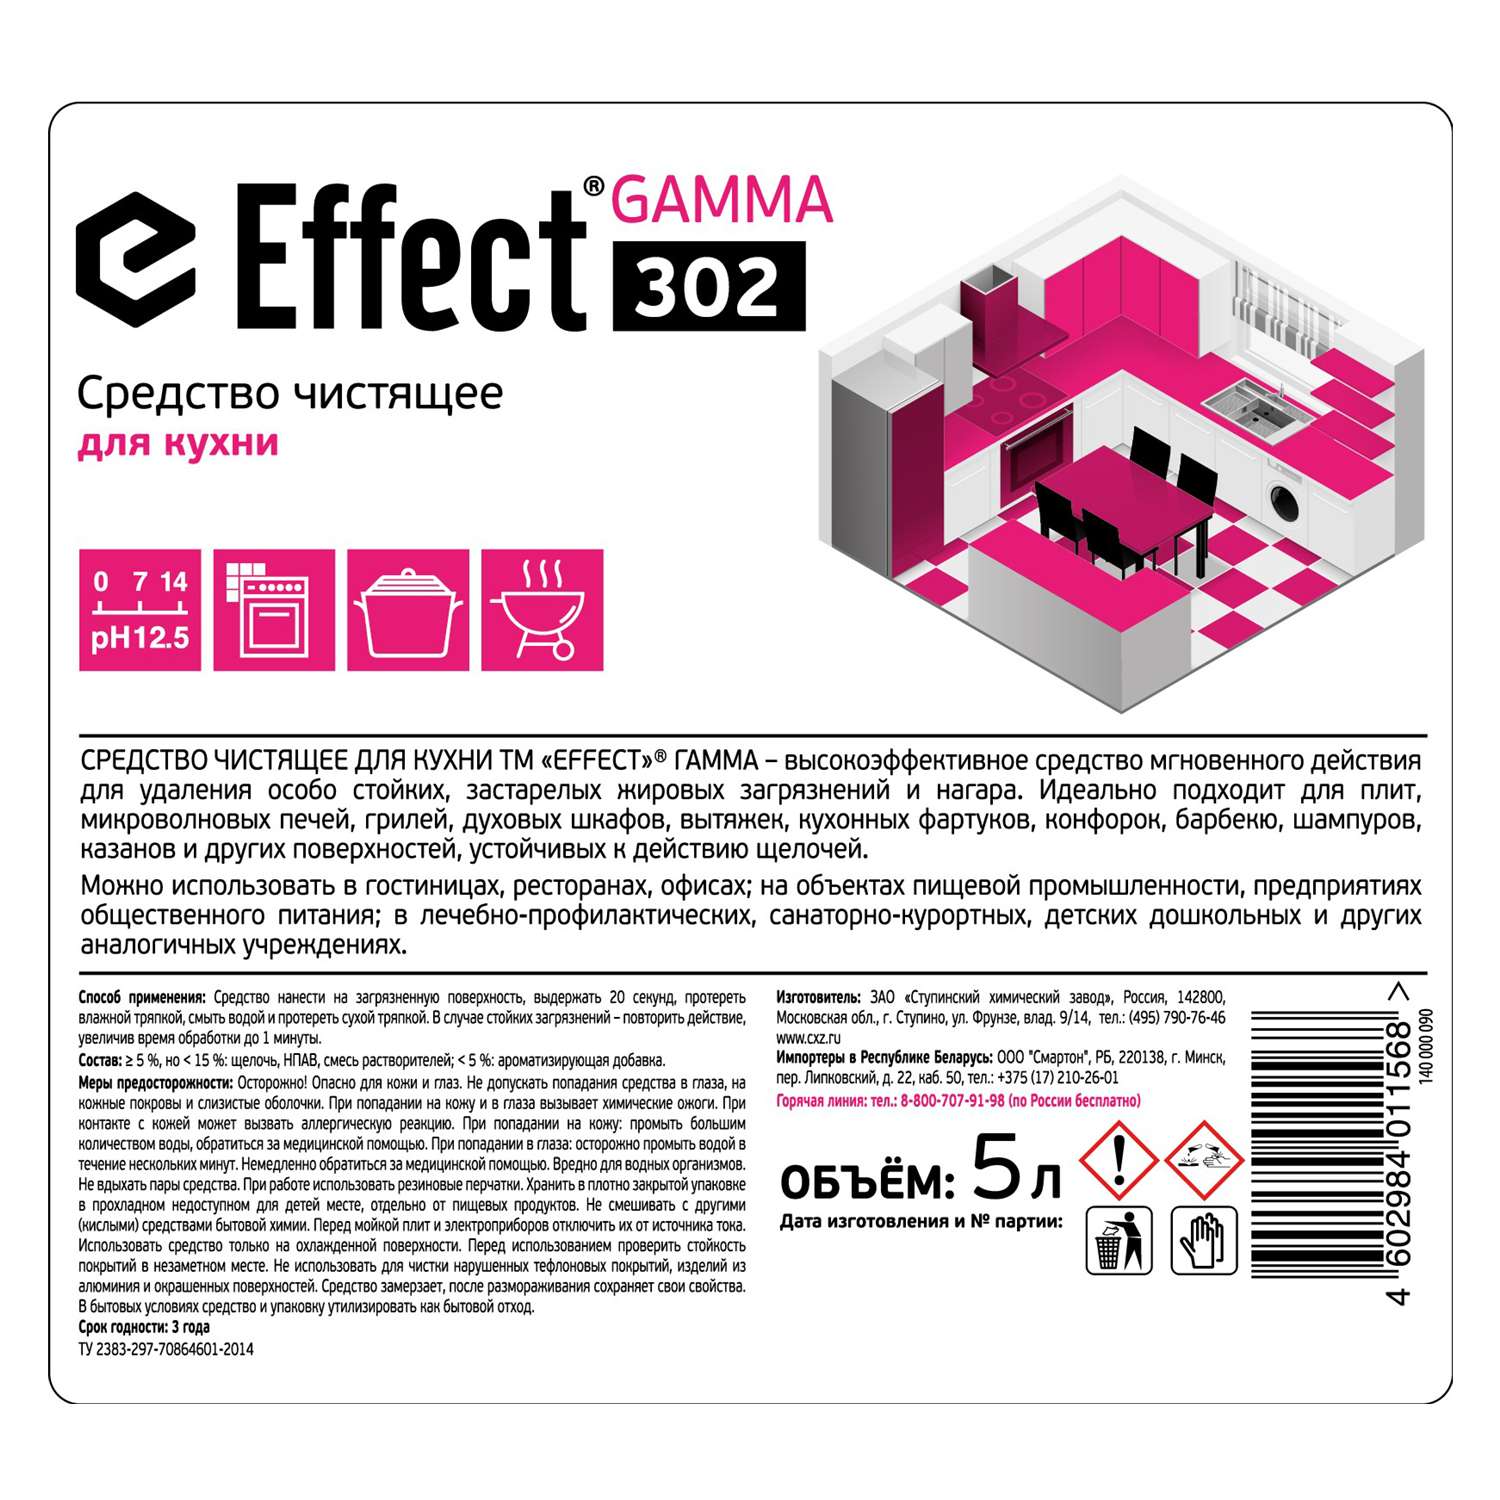 Средство чистящее Effect Gamma 302 для кухни 5 л - фото 2